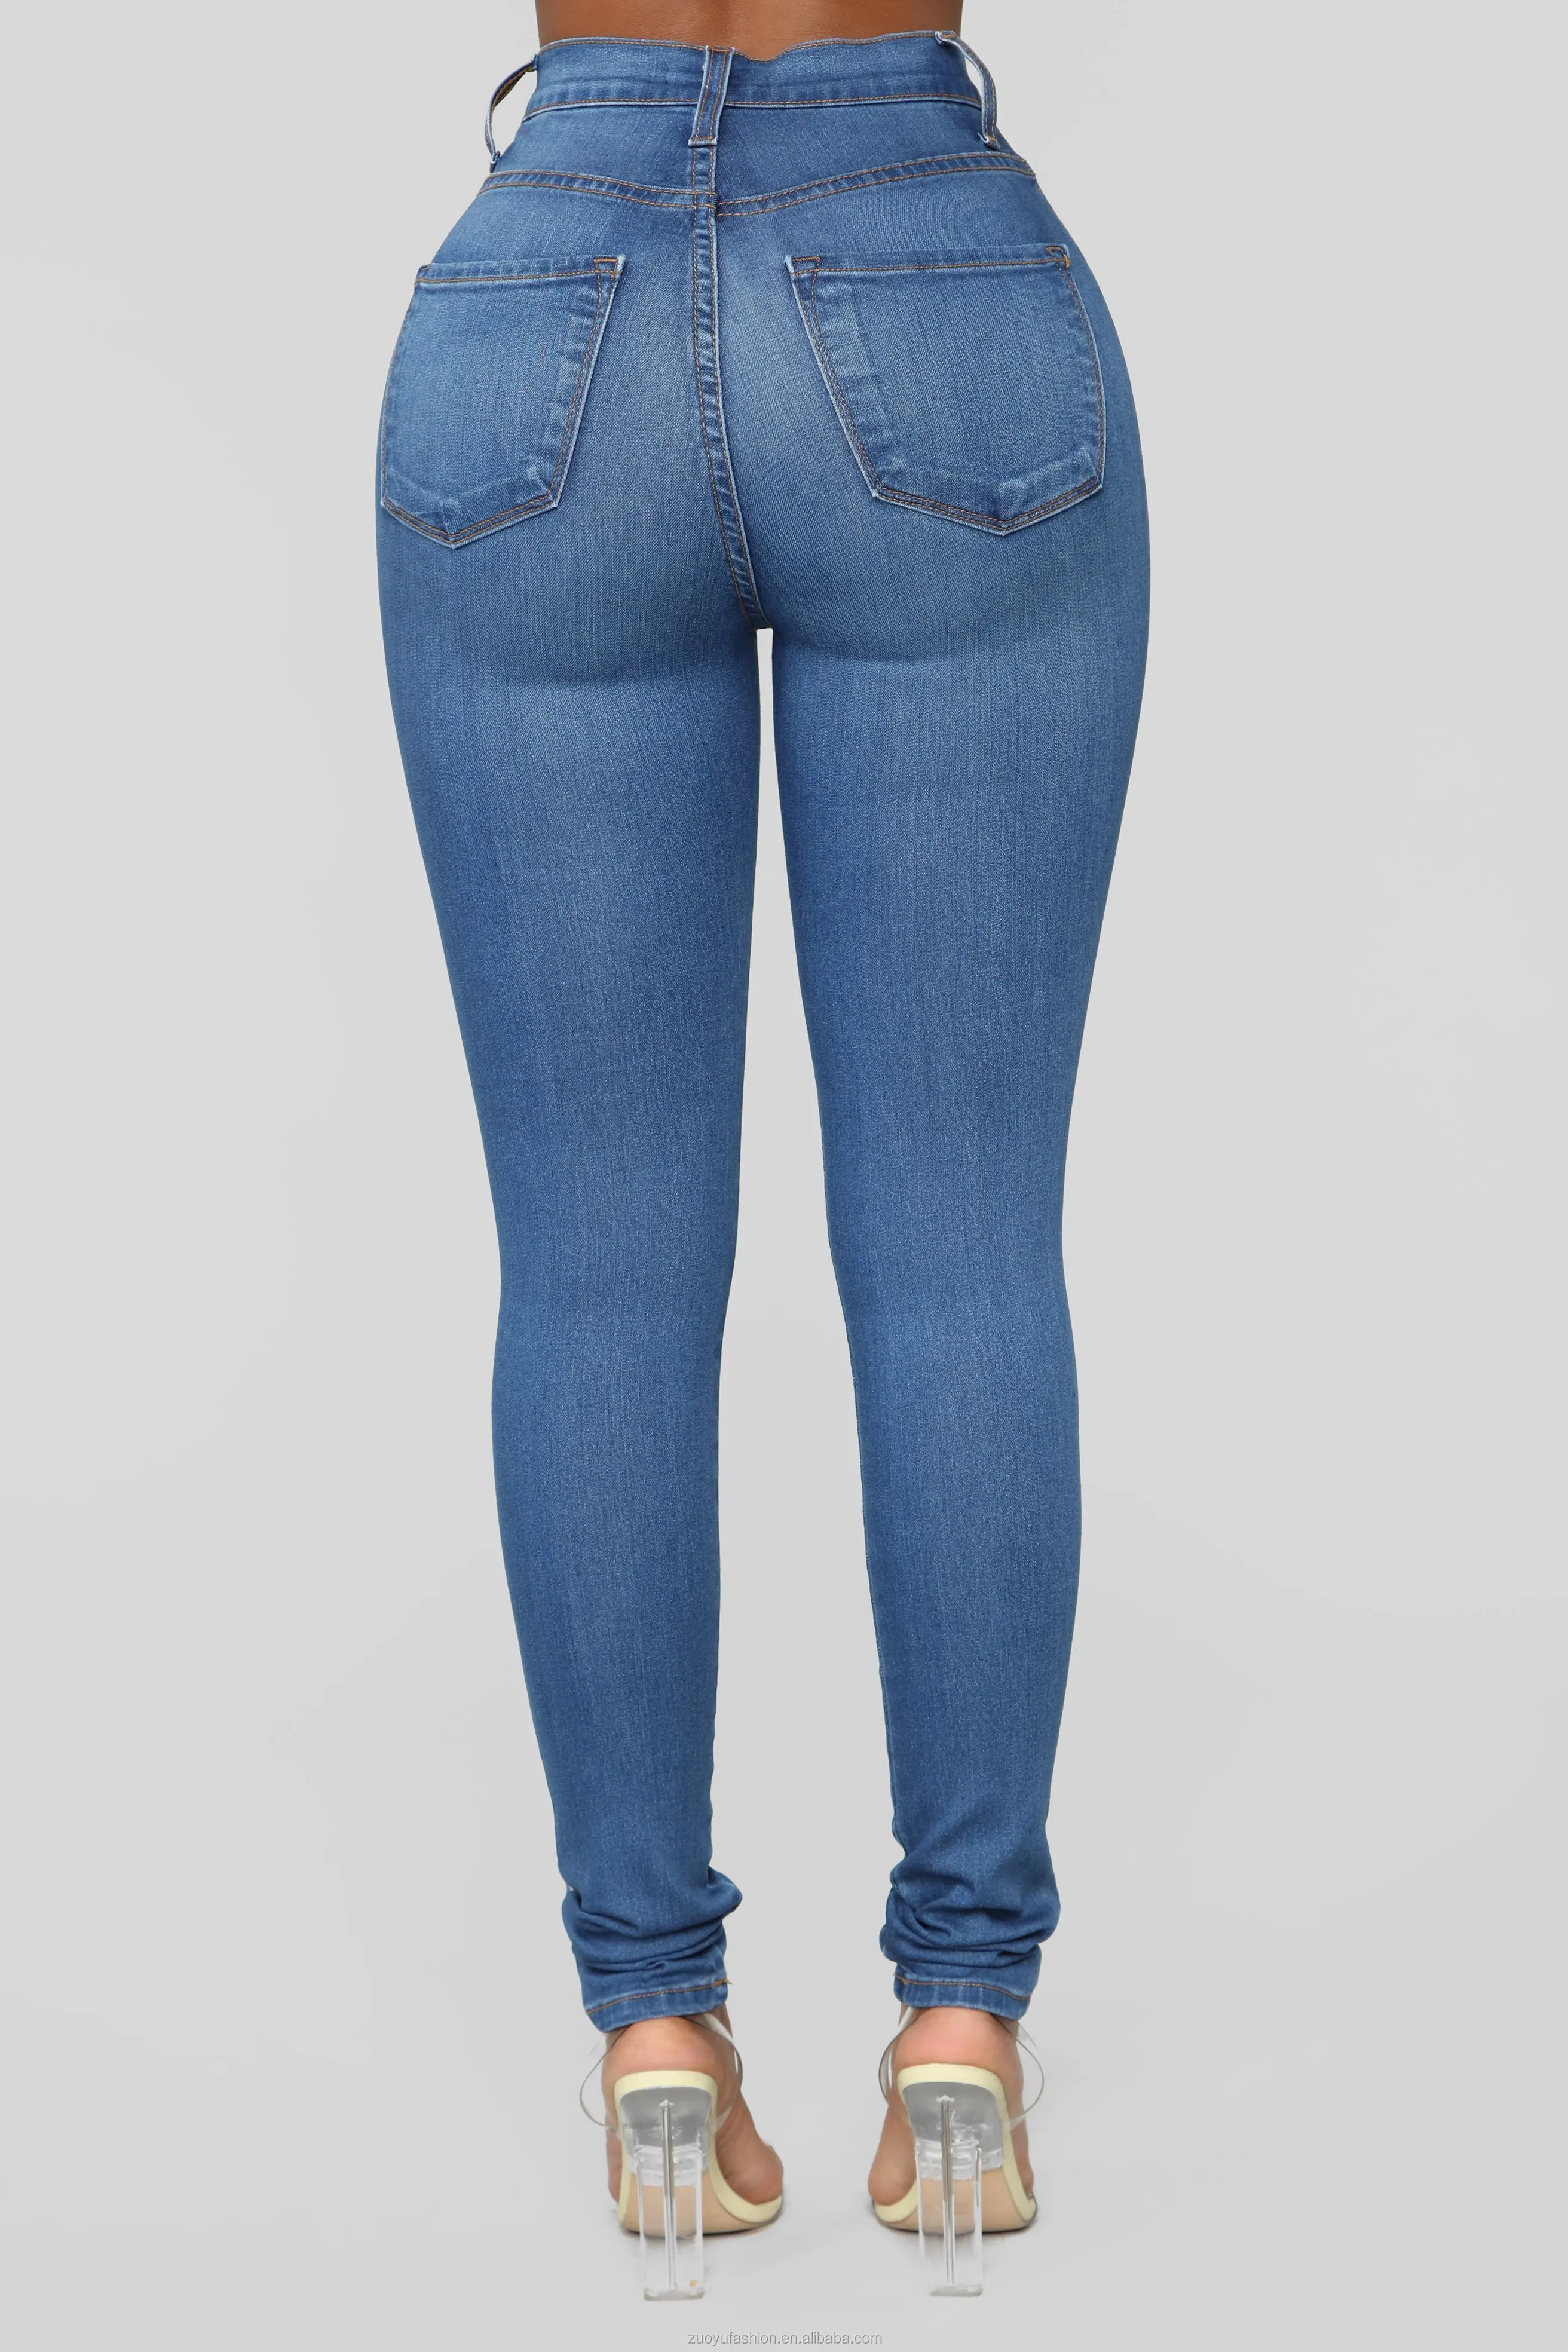 High Waist Quality Skinny Girl Jean Jeans Wear - Buy High Quality Women ...